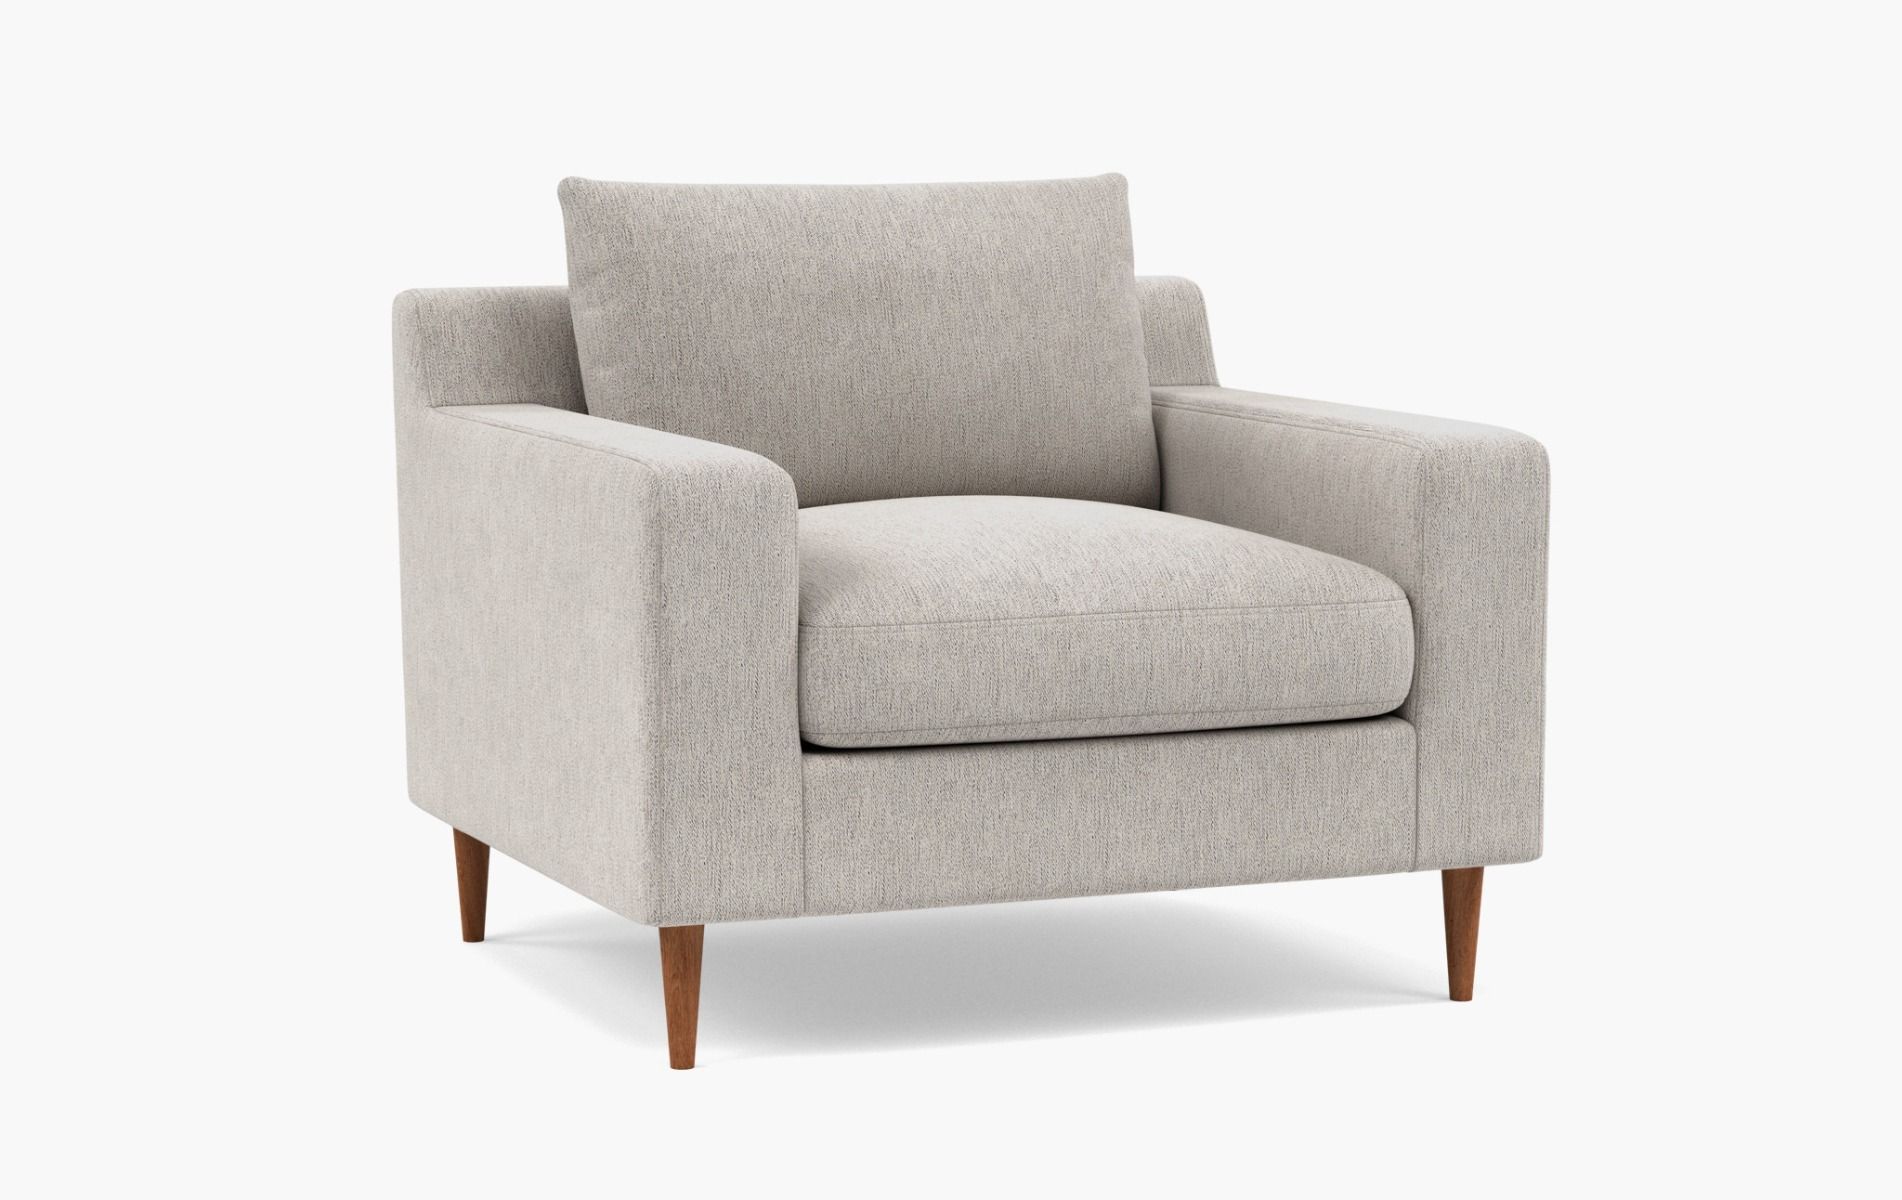 Sloan Petite Chair | Interior Define